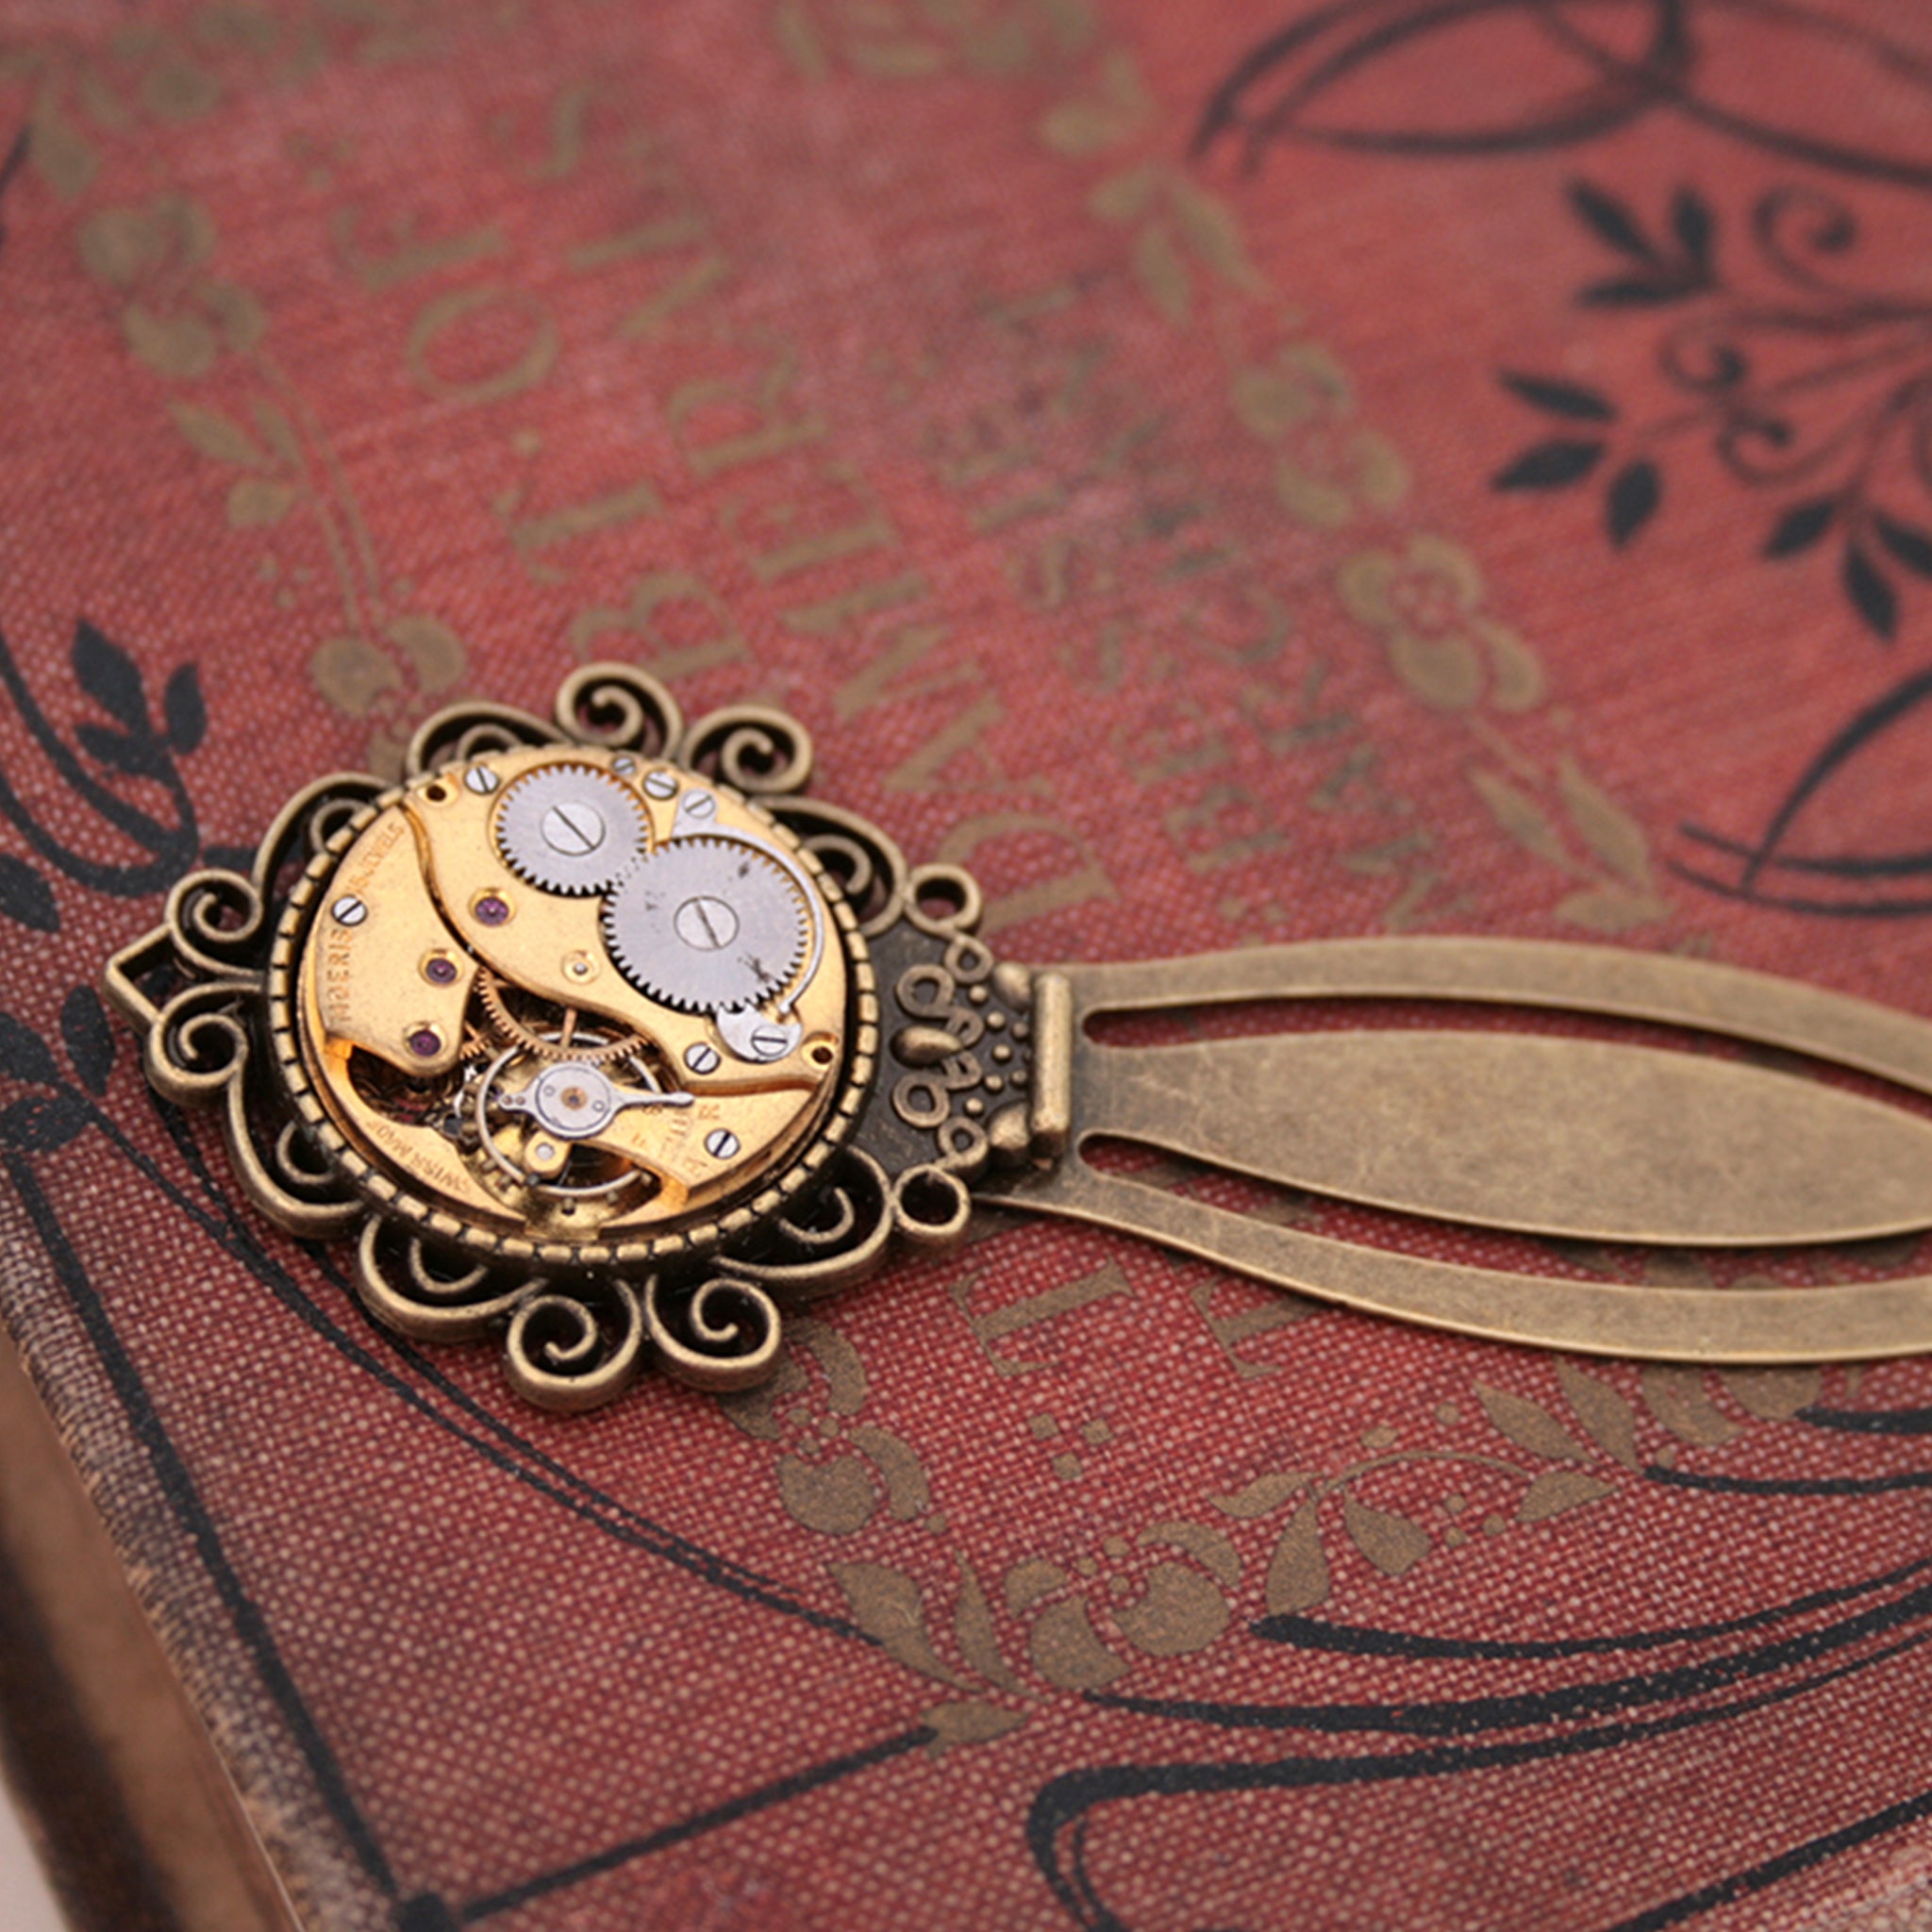 Unique Bronze Bookmark made of vintage watch movement